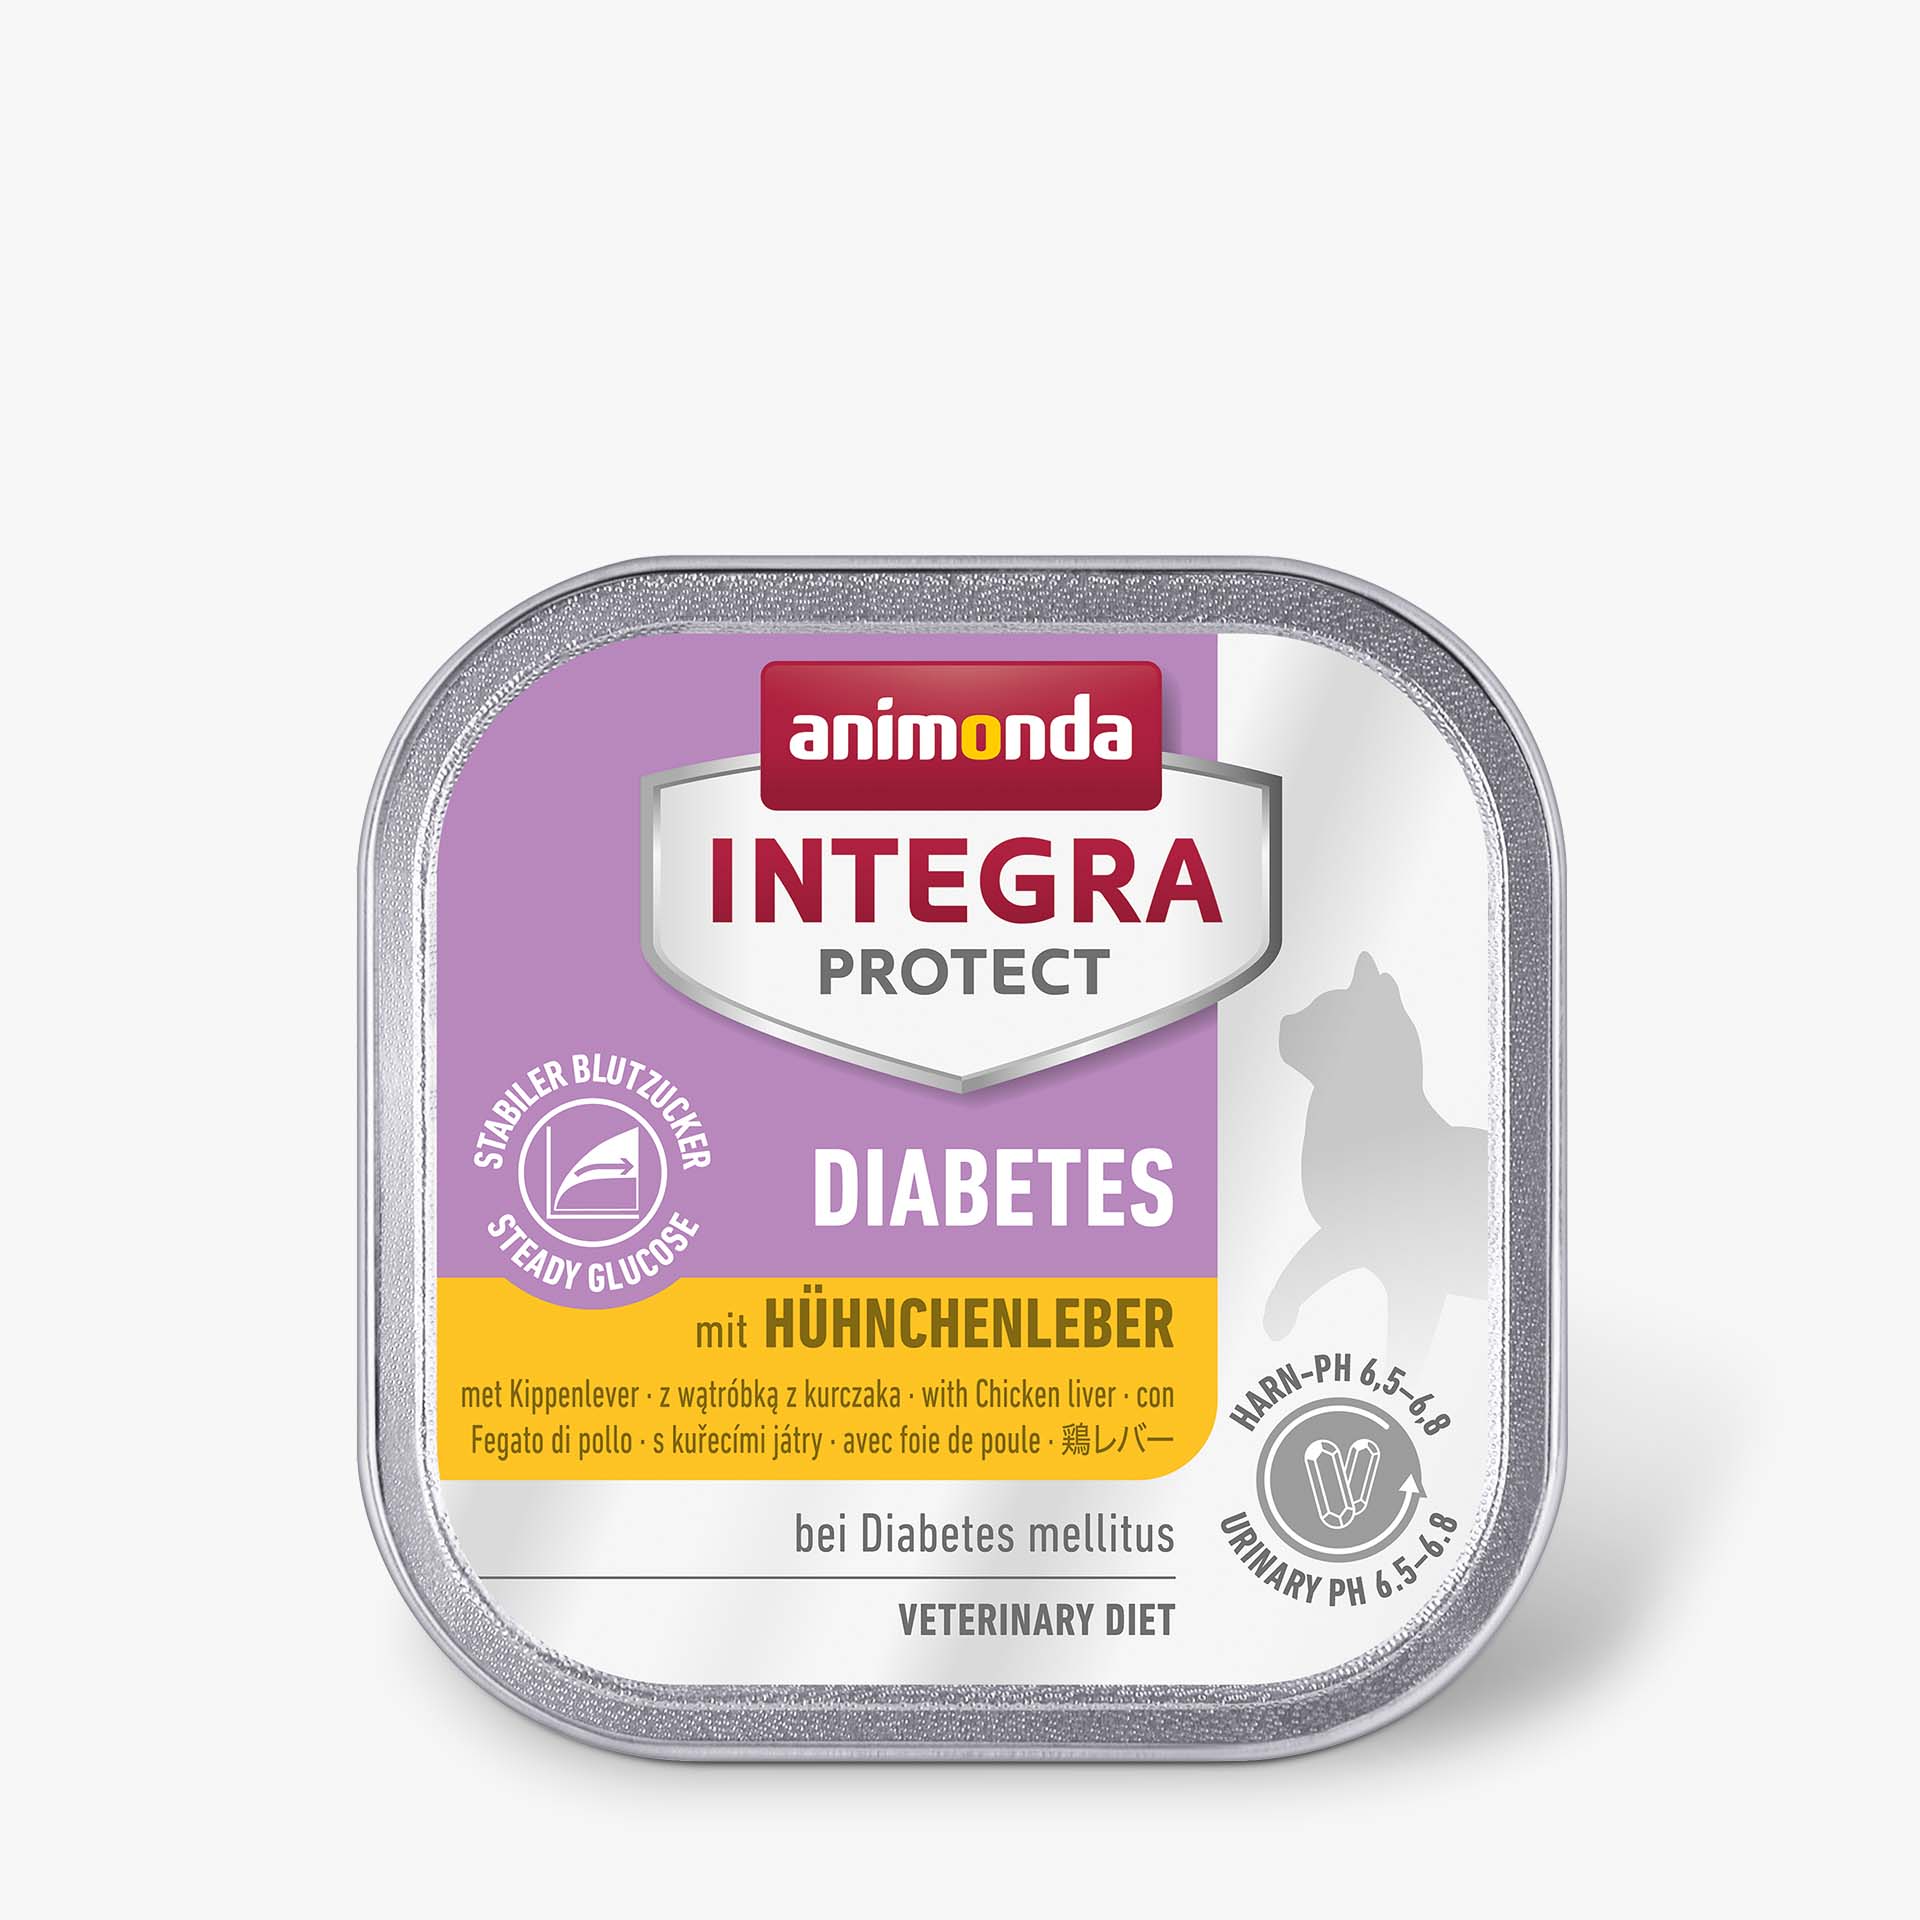 INTEGRA PROTECT Diabetes Adult mit Hühnchenleber